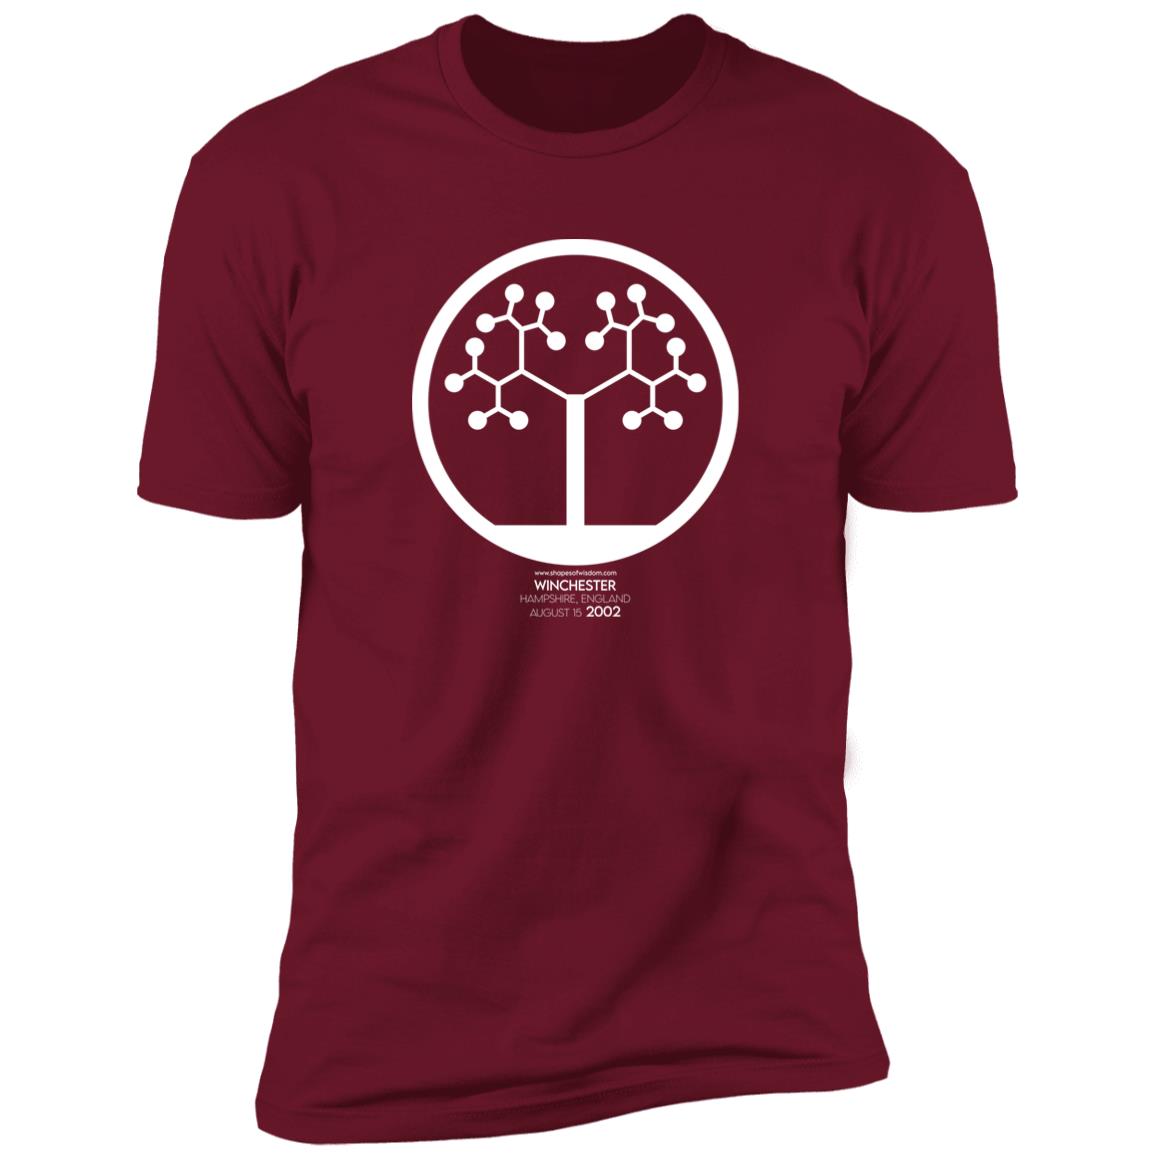 Crop Circle Premium T-Shirt - Winchester